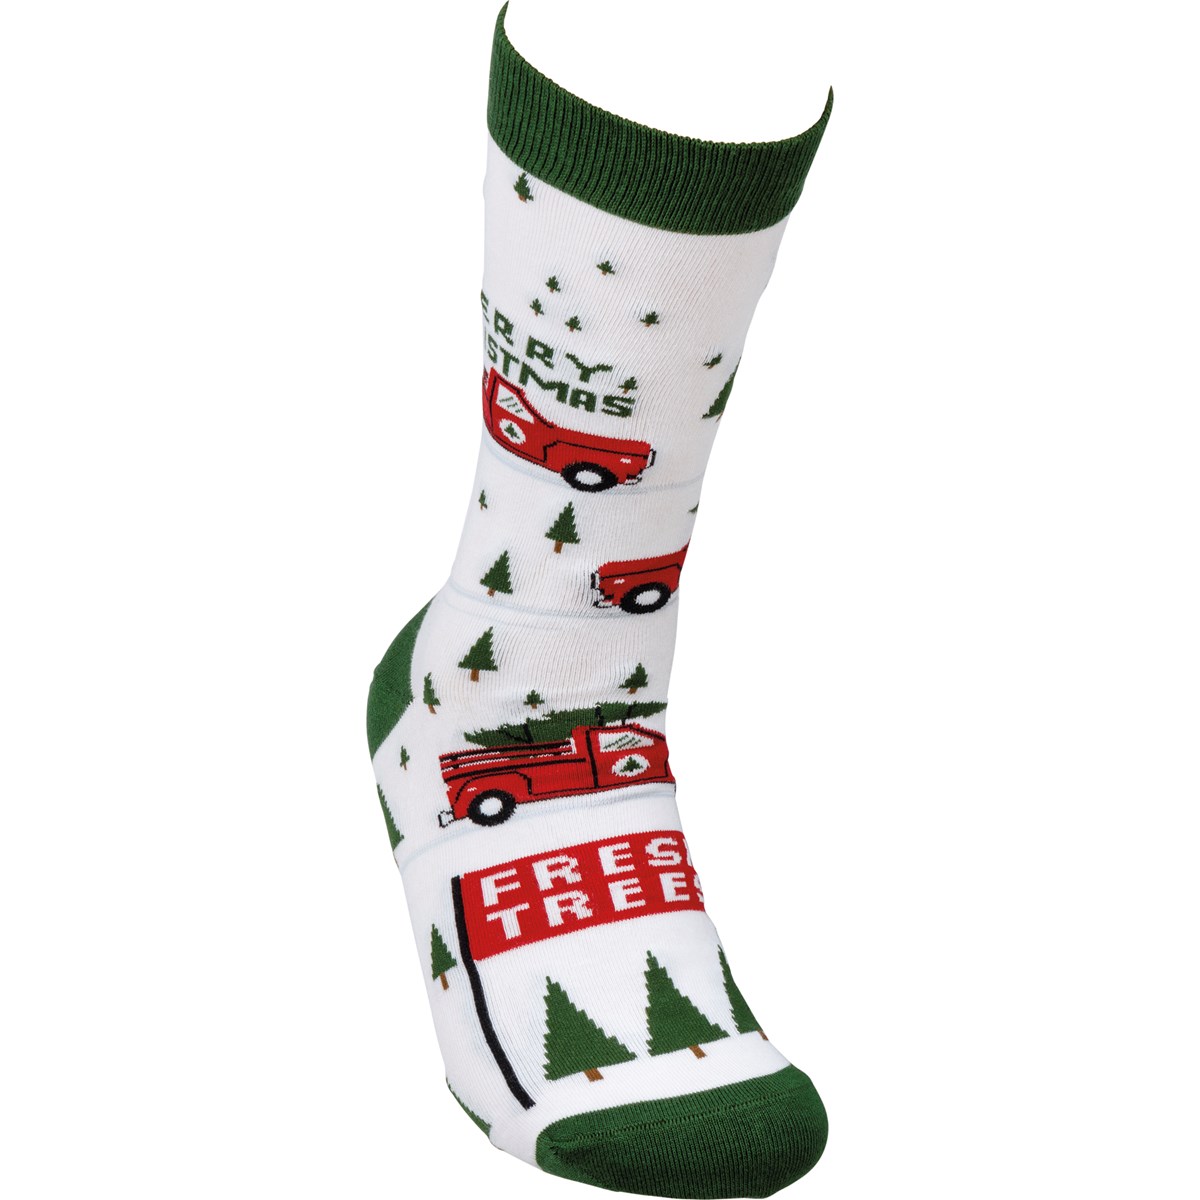 Truck And Tree Merry Christmas Socks - Cotton, Nylon, Spandex